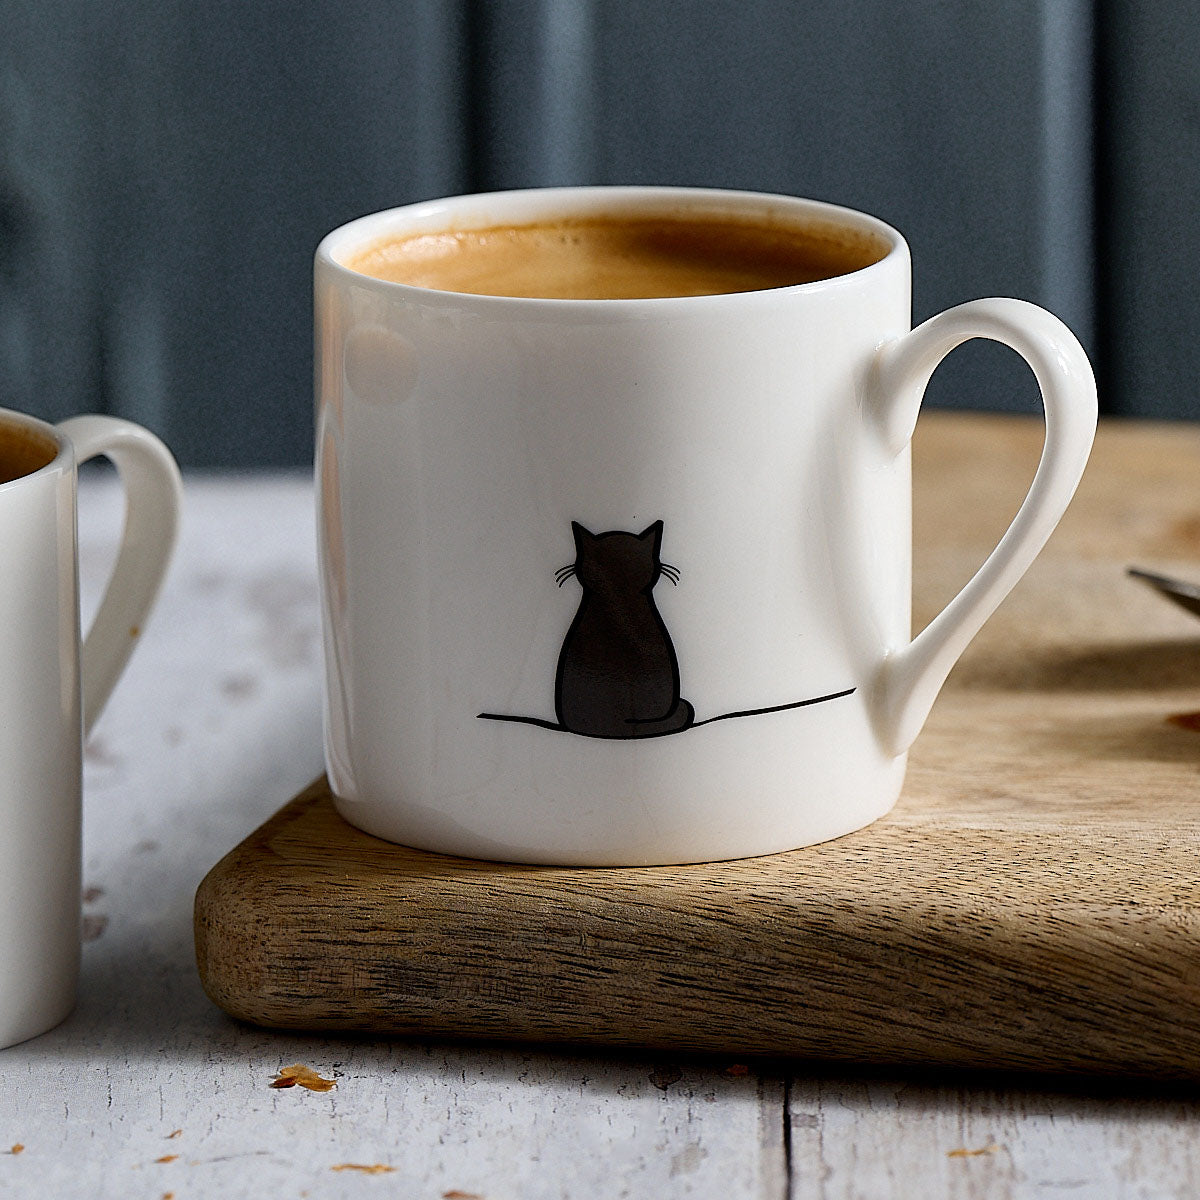 Cat Espresso Mugs, Set of 2, with Sitting Cat